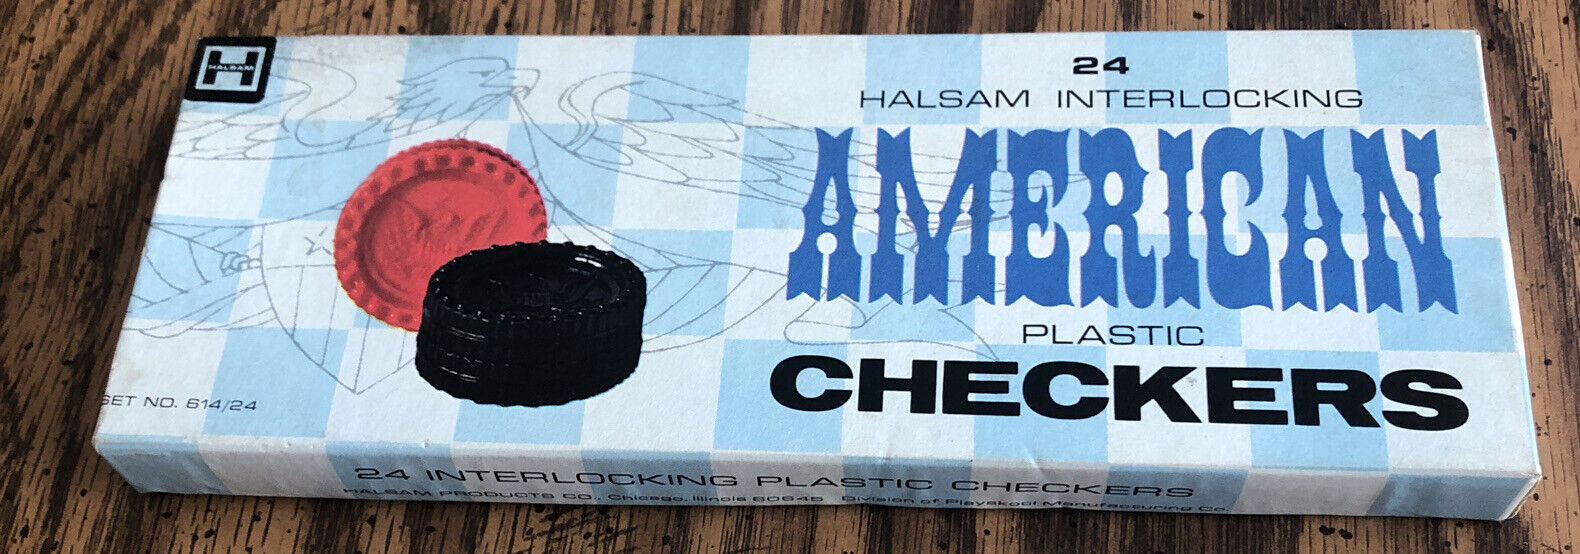 Vintage 24 Halsam Interlocking American Plastic Checkers In Box 614/24 Excellent